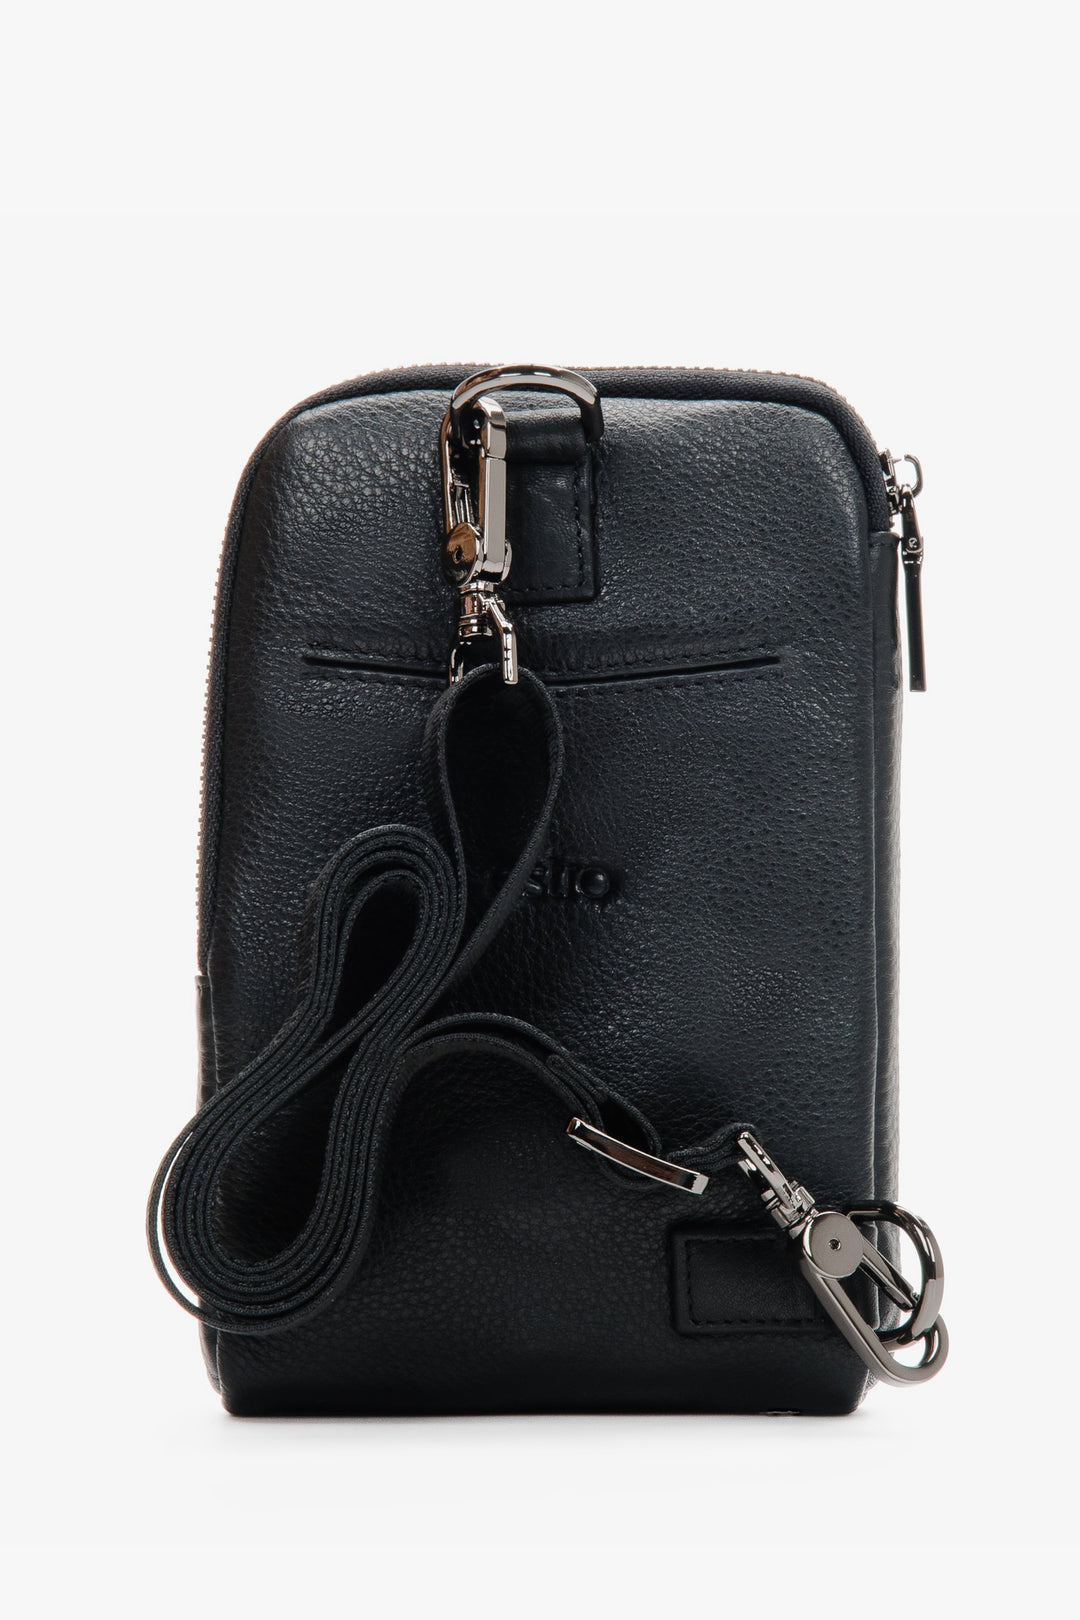 Men's black genuine leather wallet by Estro - reverse side.